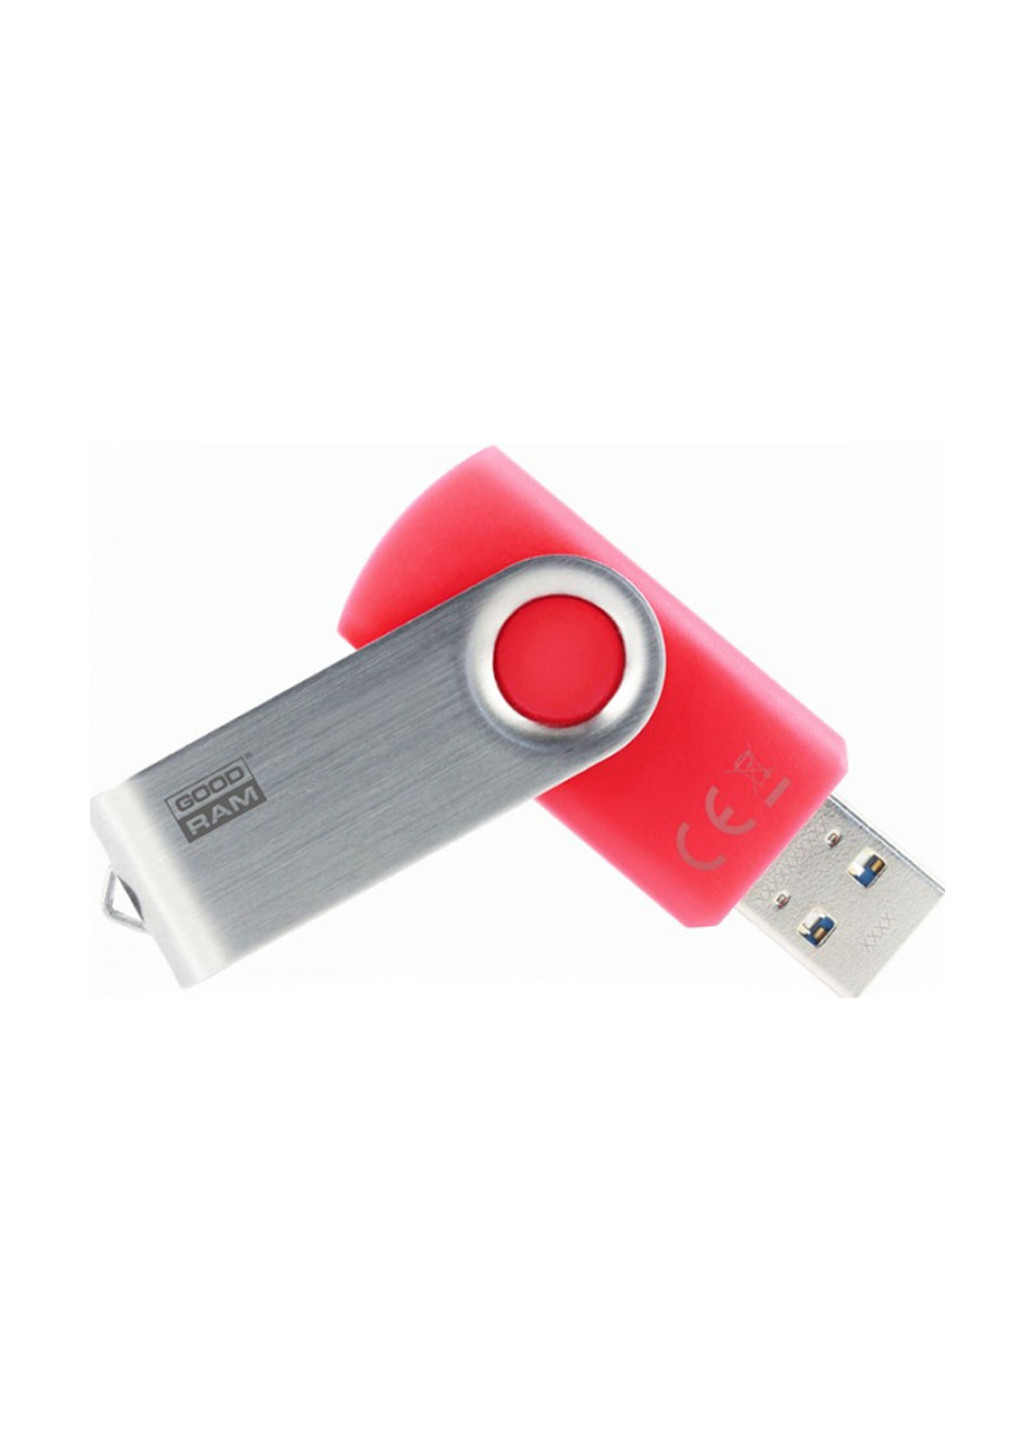 Флеш память USB UTS3 64GB USB 3.0 Red (UTS3-0640R0R11) Goodram флеш память usb goodram uts3 16gb usb 3.0 red (uts3-0640r0r11) (136742723)